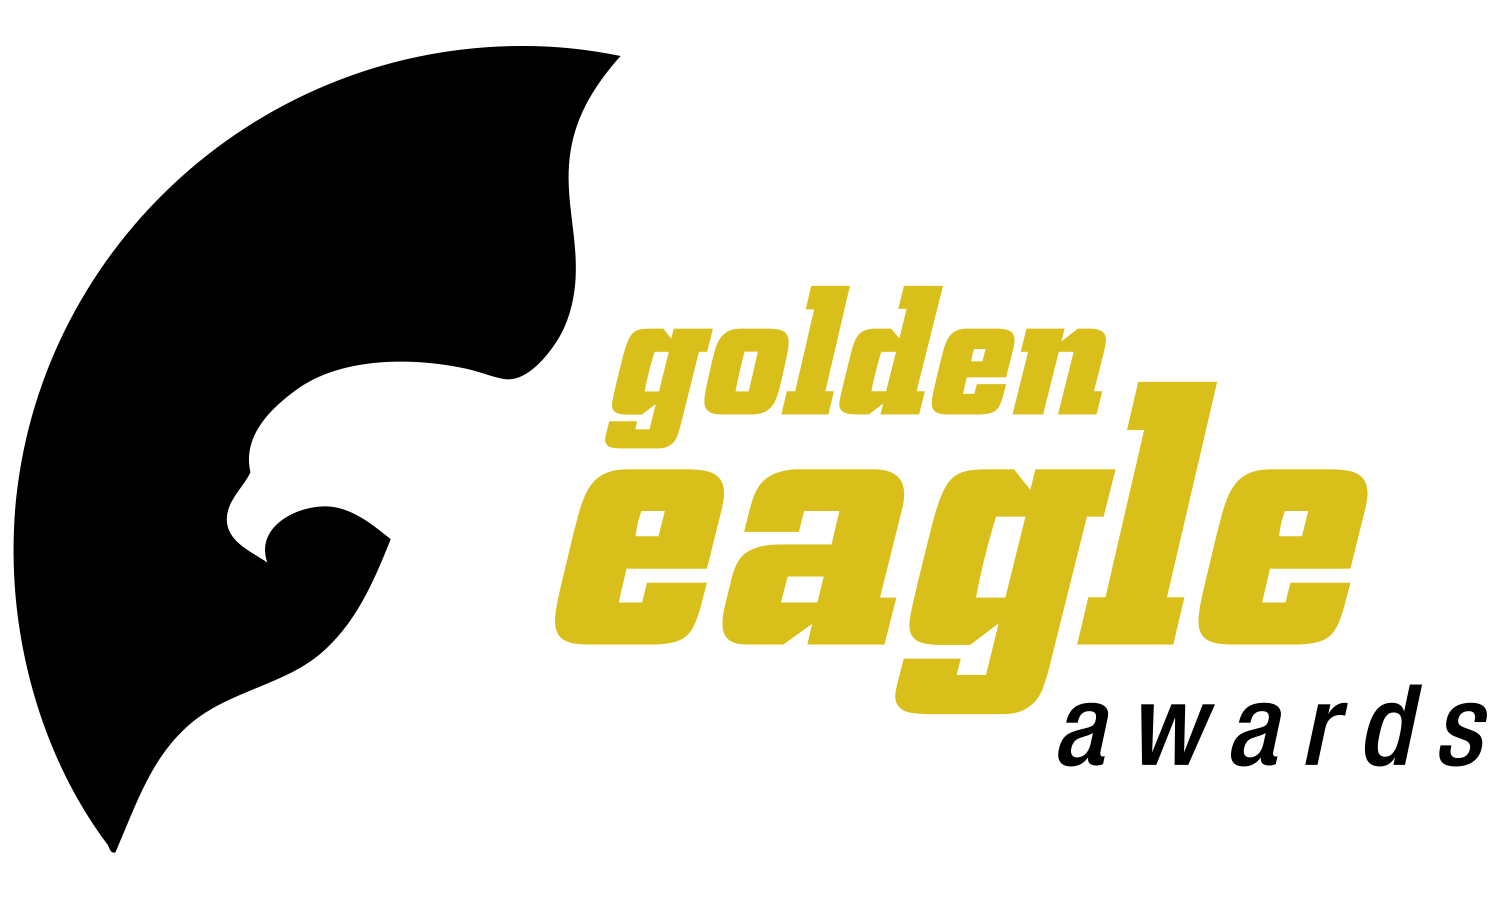 golden eagle logo